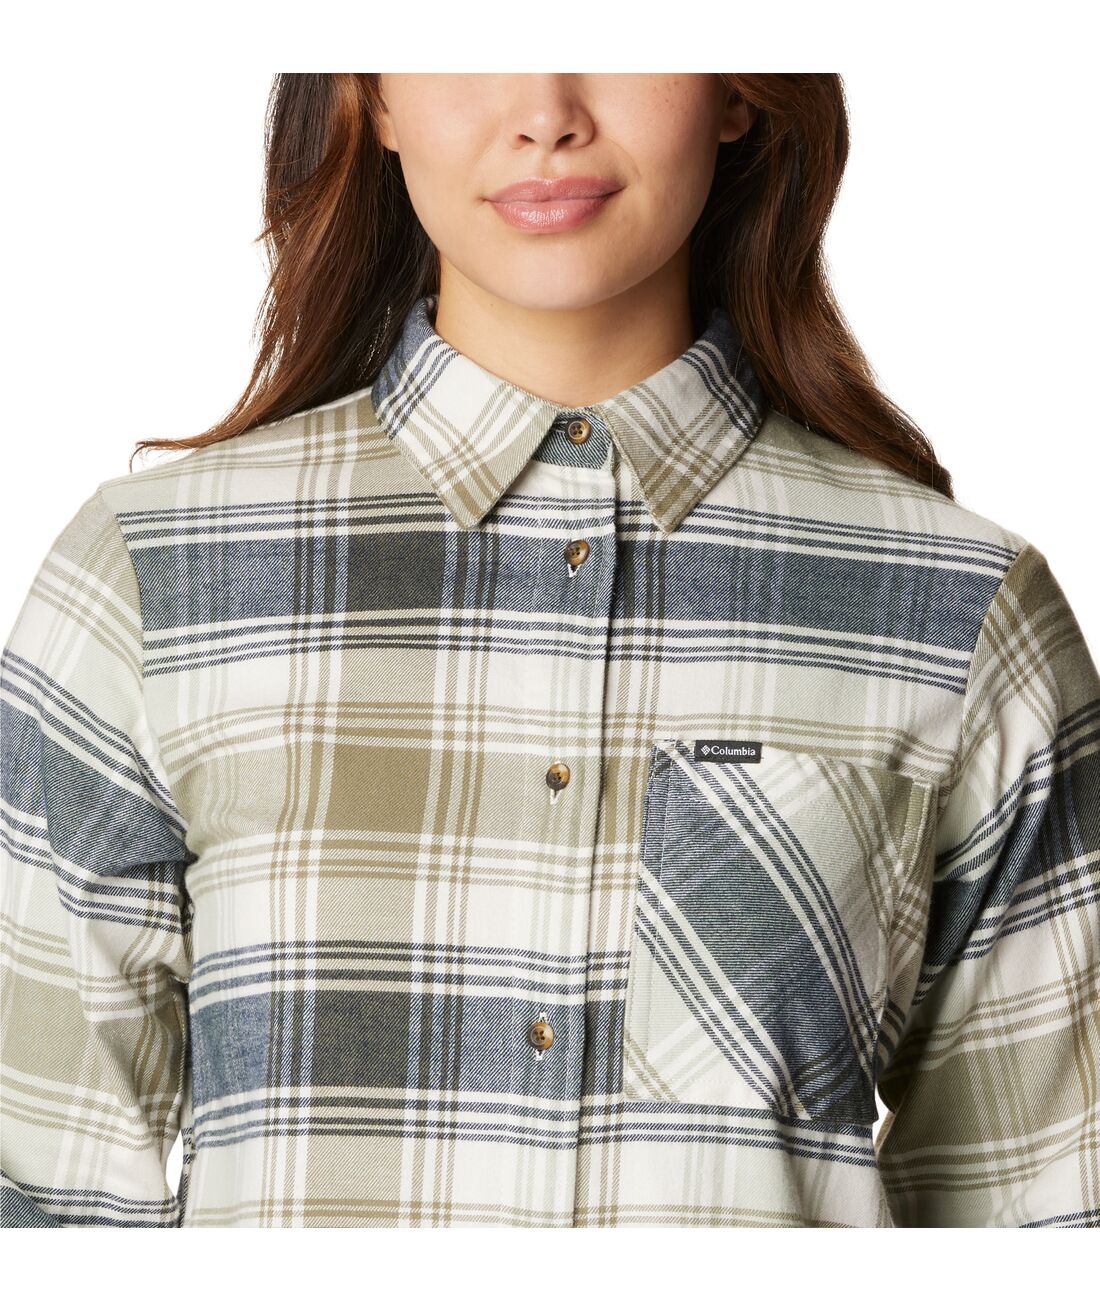 Calico Basin Flannel Long Sleeve Shirt